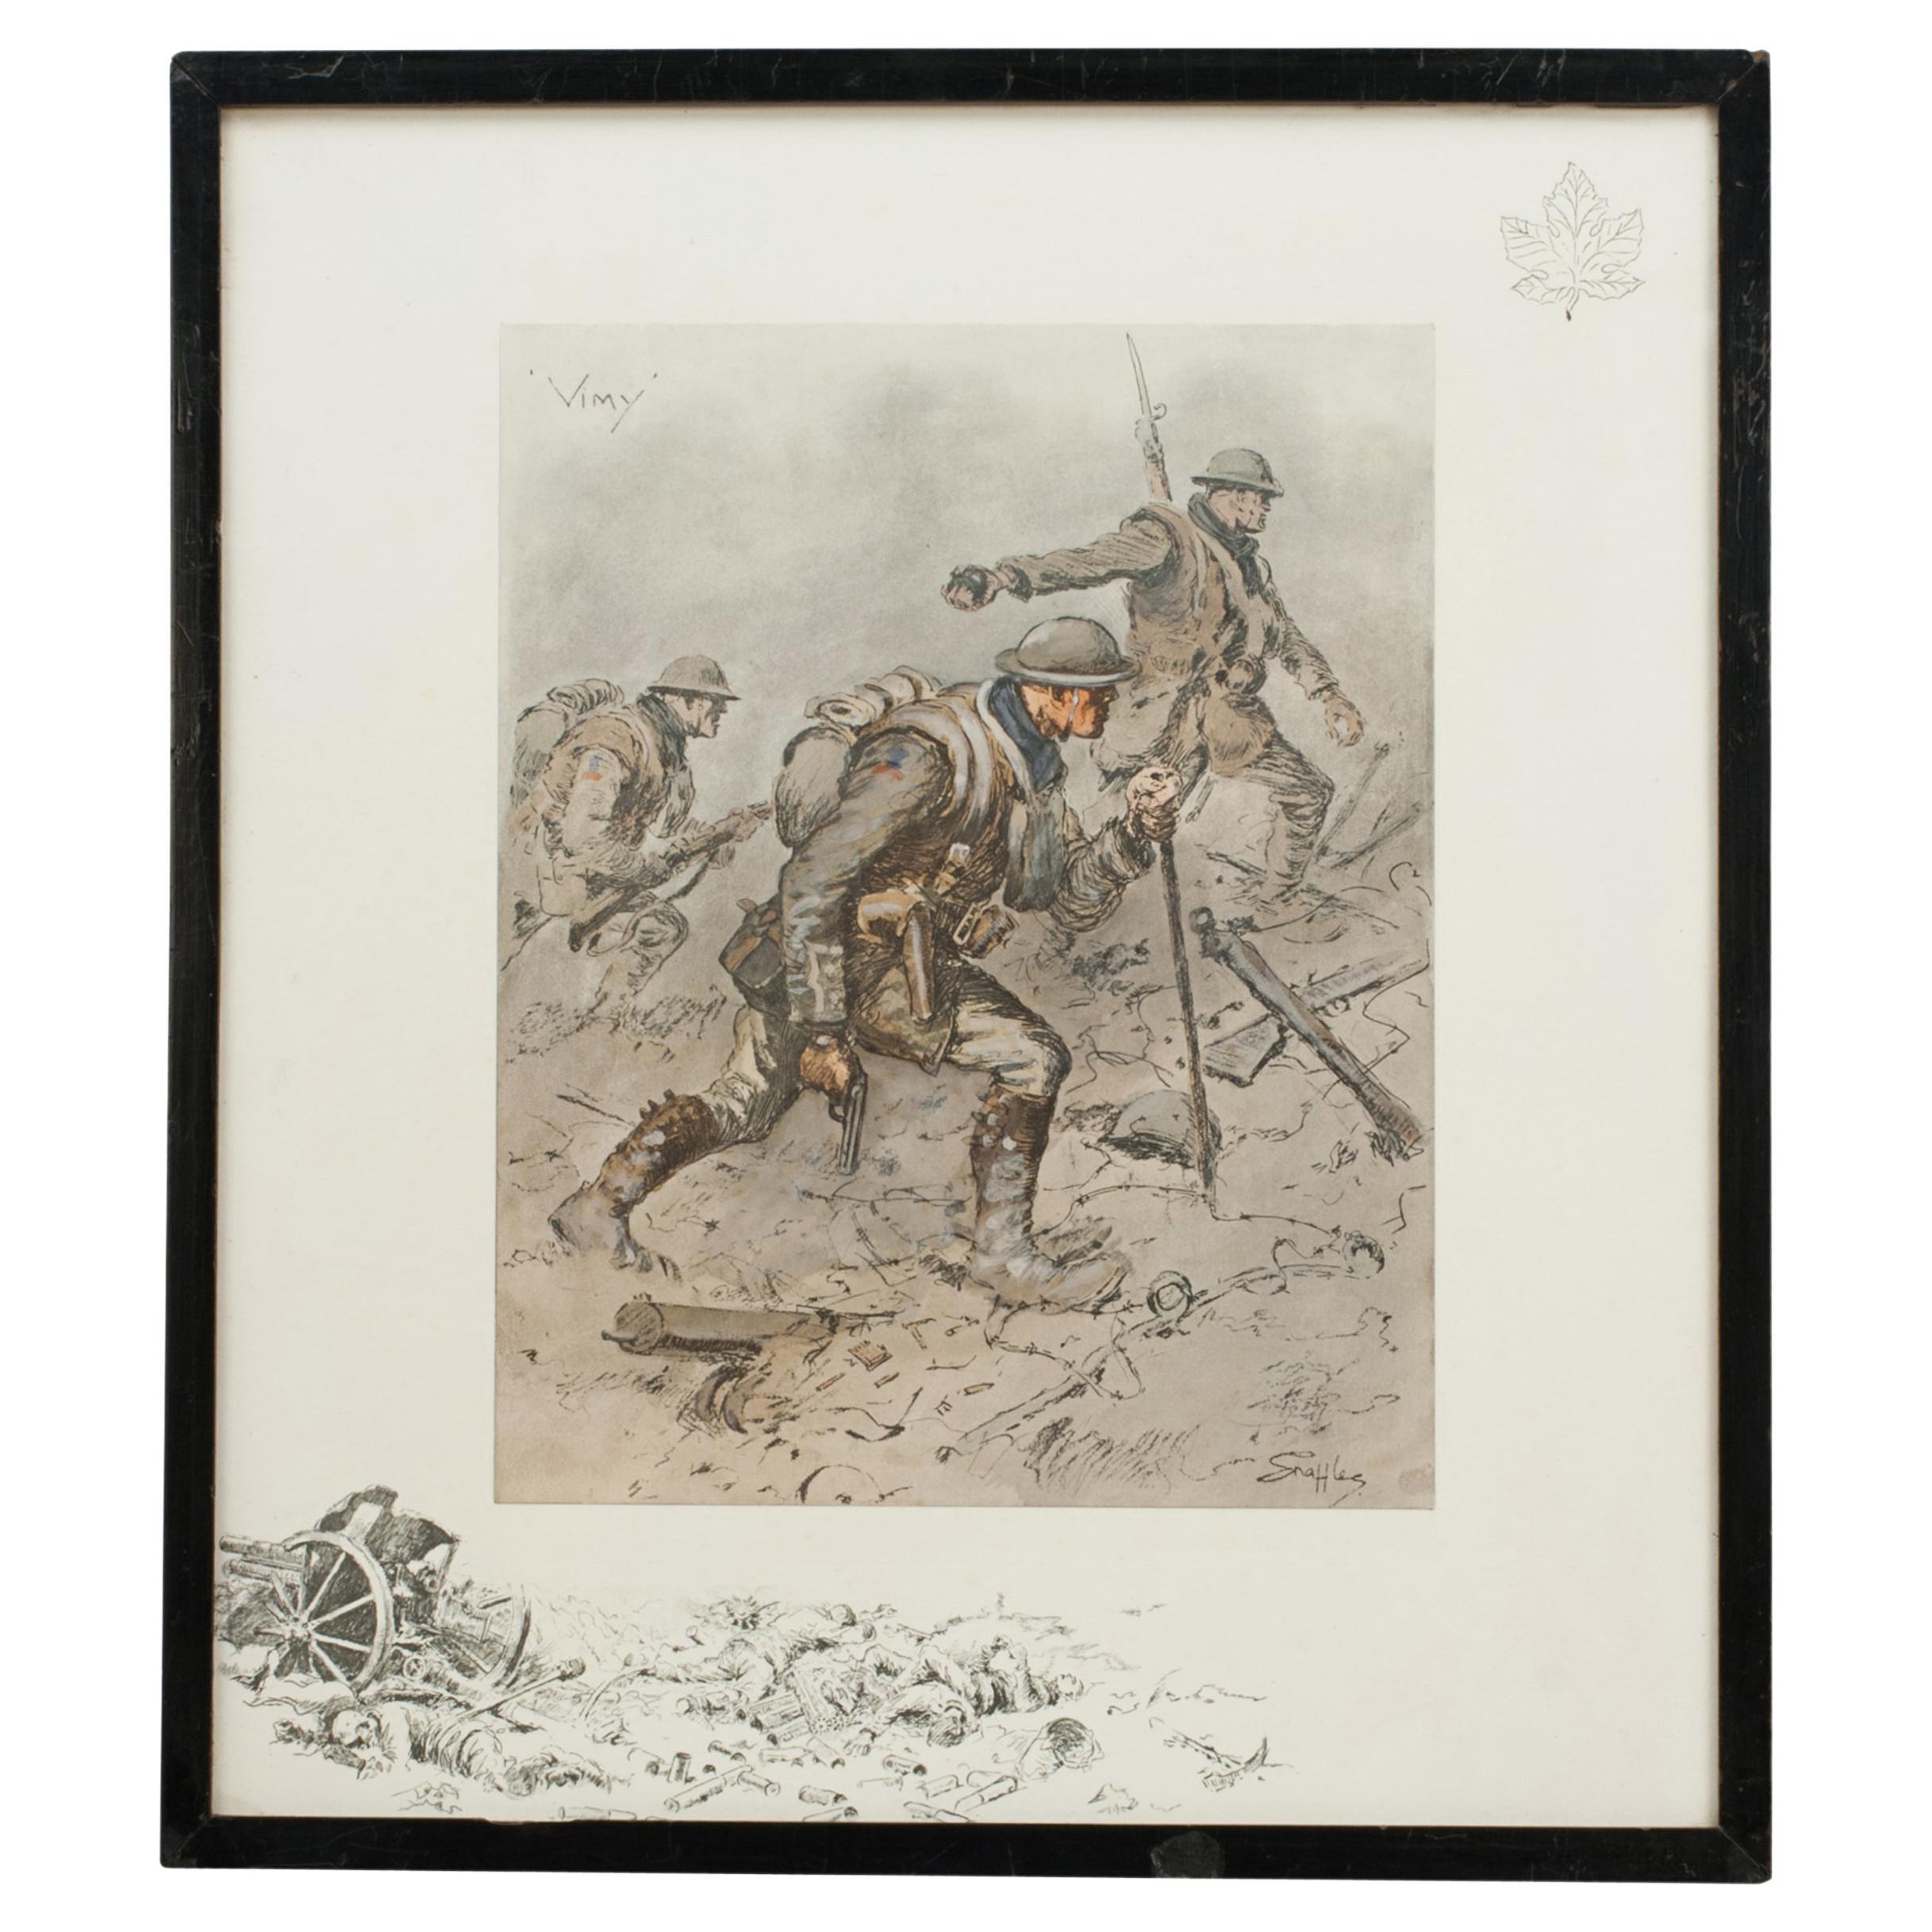 WW1 Military Print, Vimy, by Snaffles